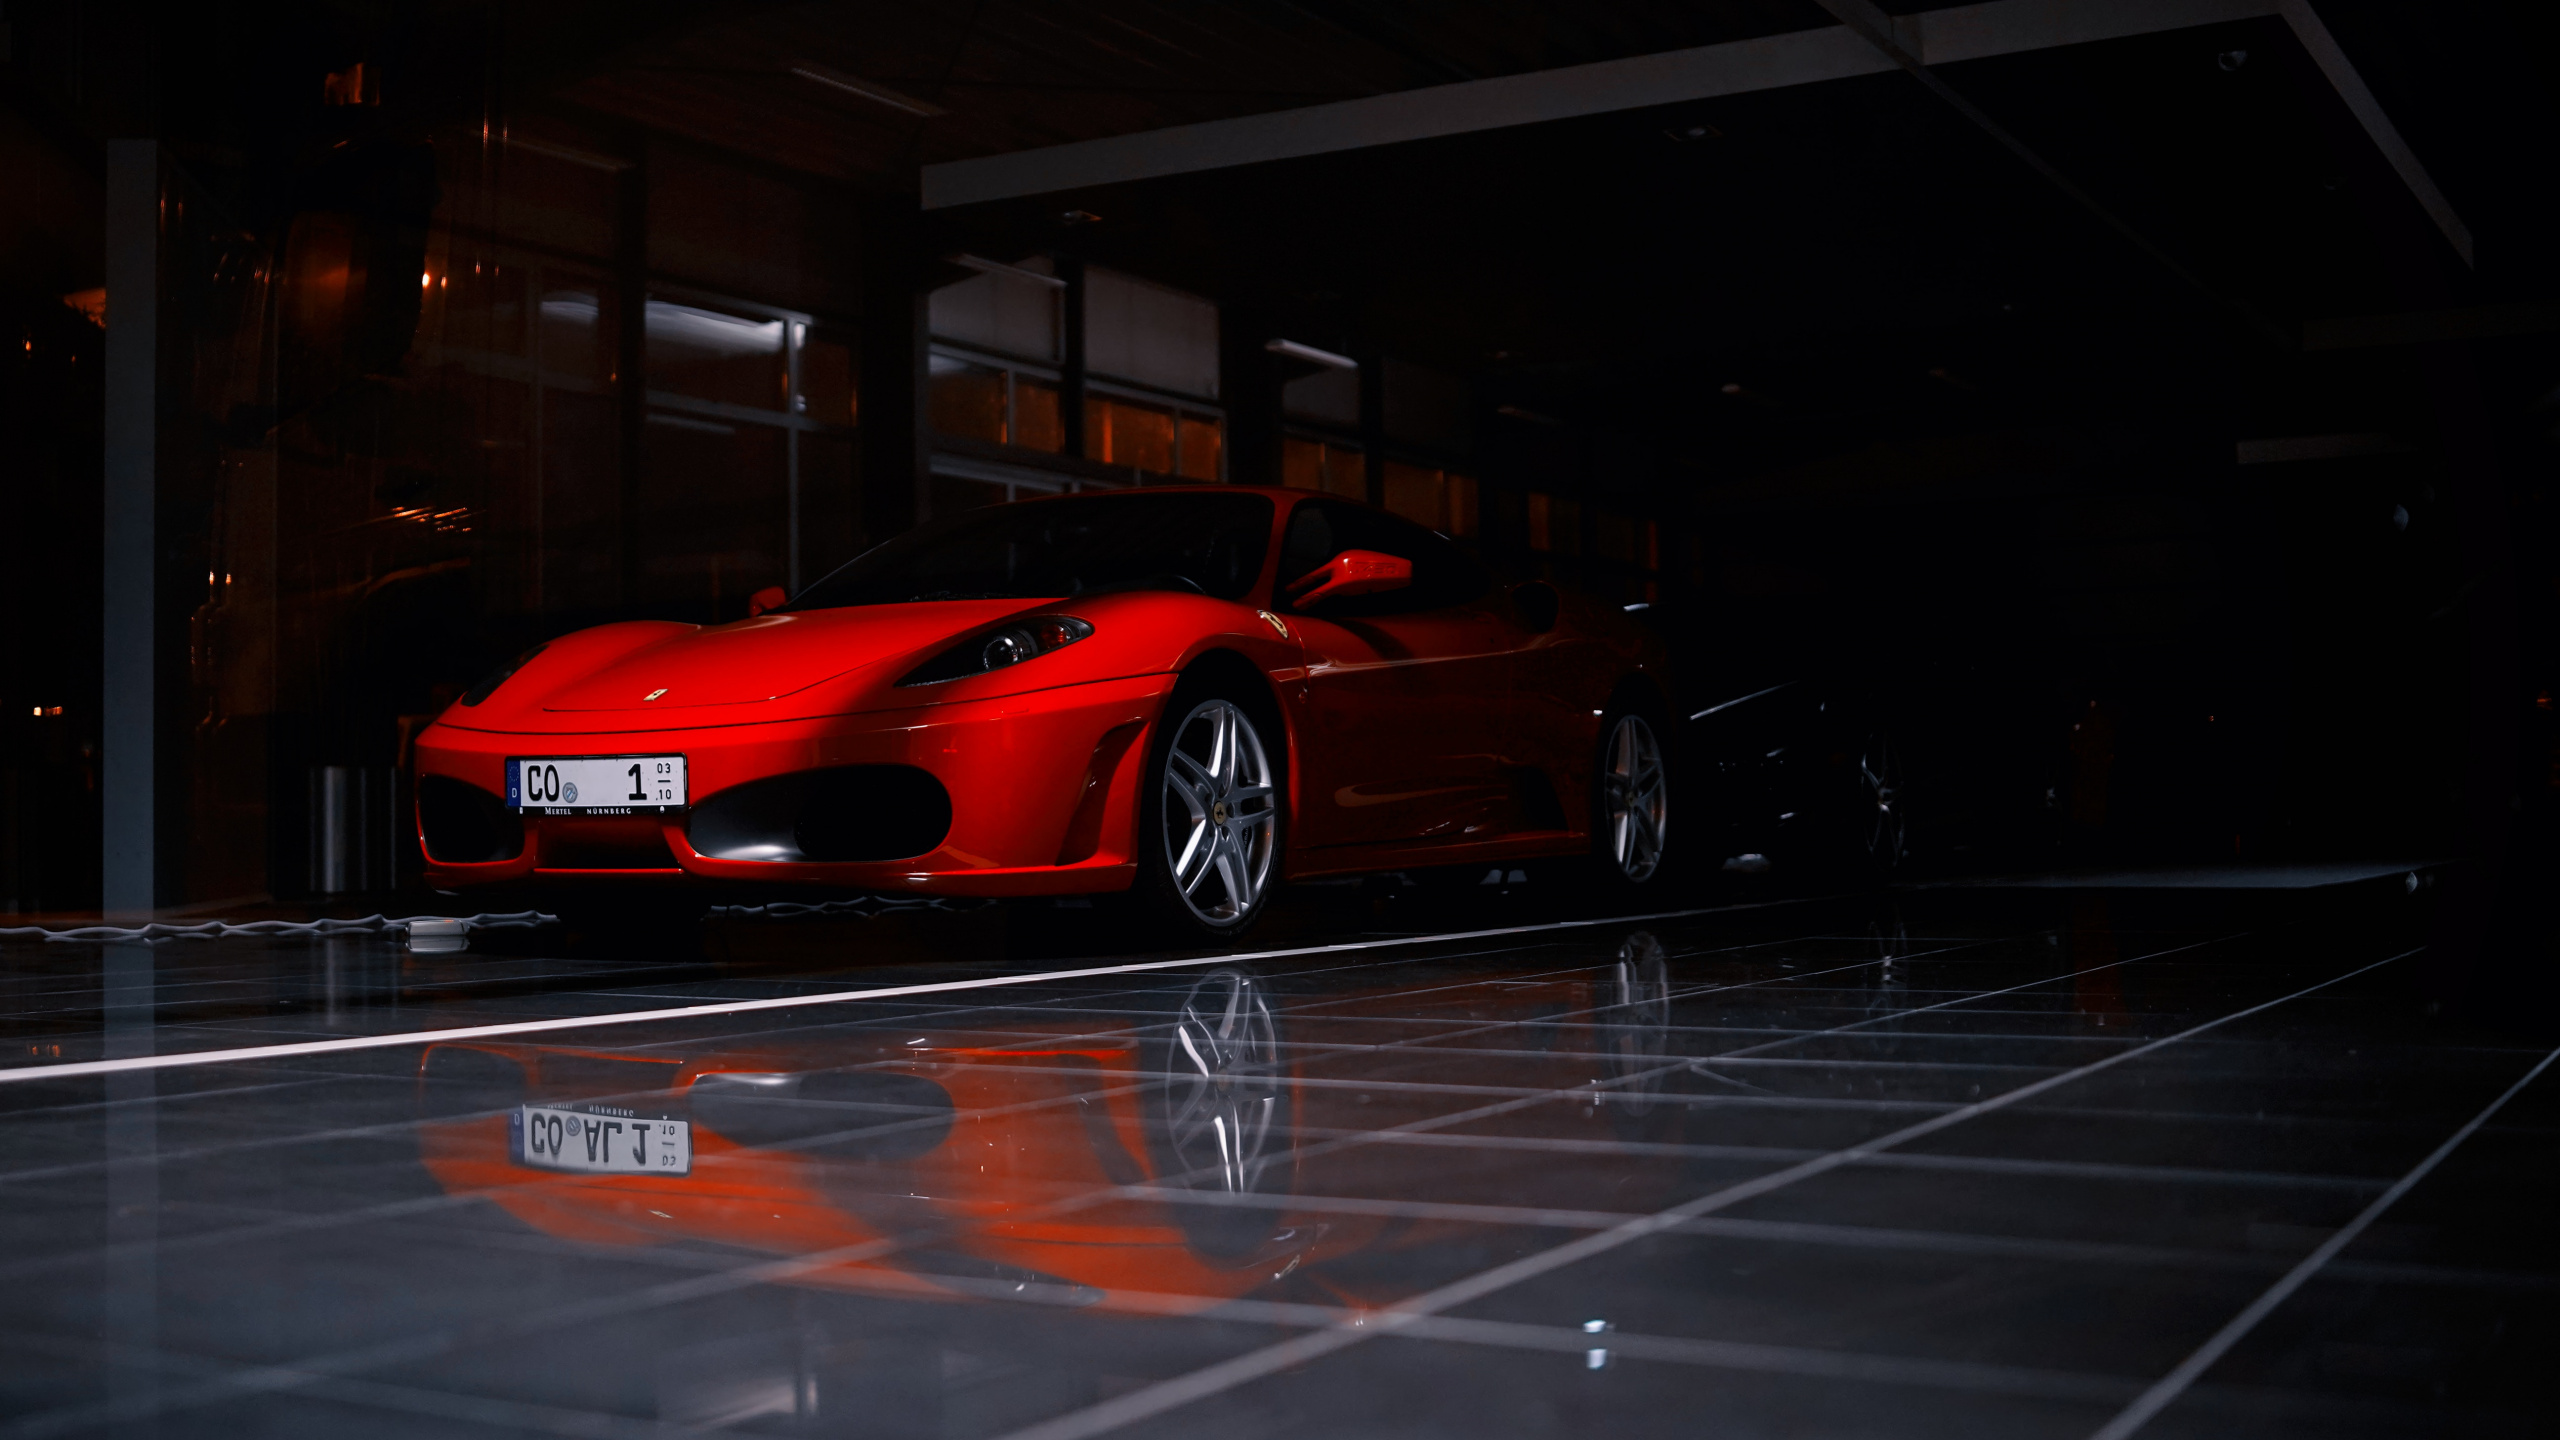 Red Ferrari 458 Italia Parked on Parking Lot. Wallpaper in 2560x1440 Resolution